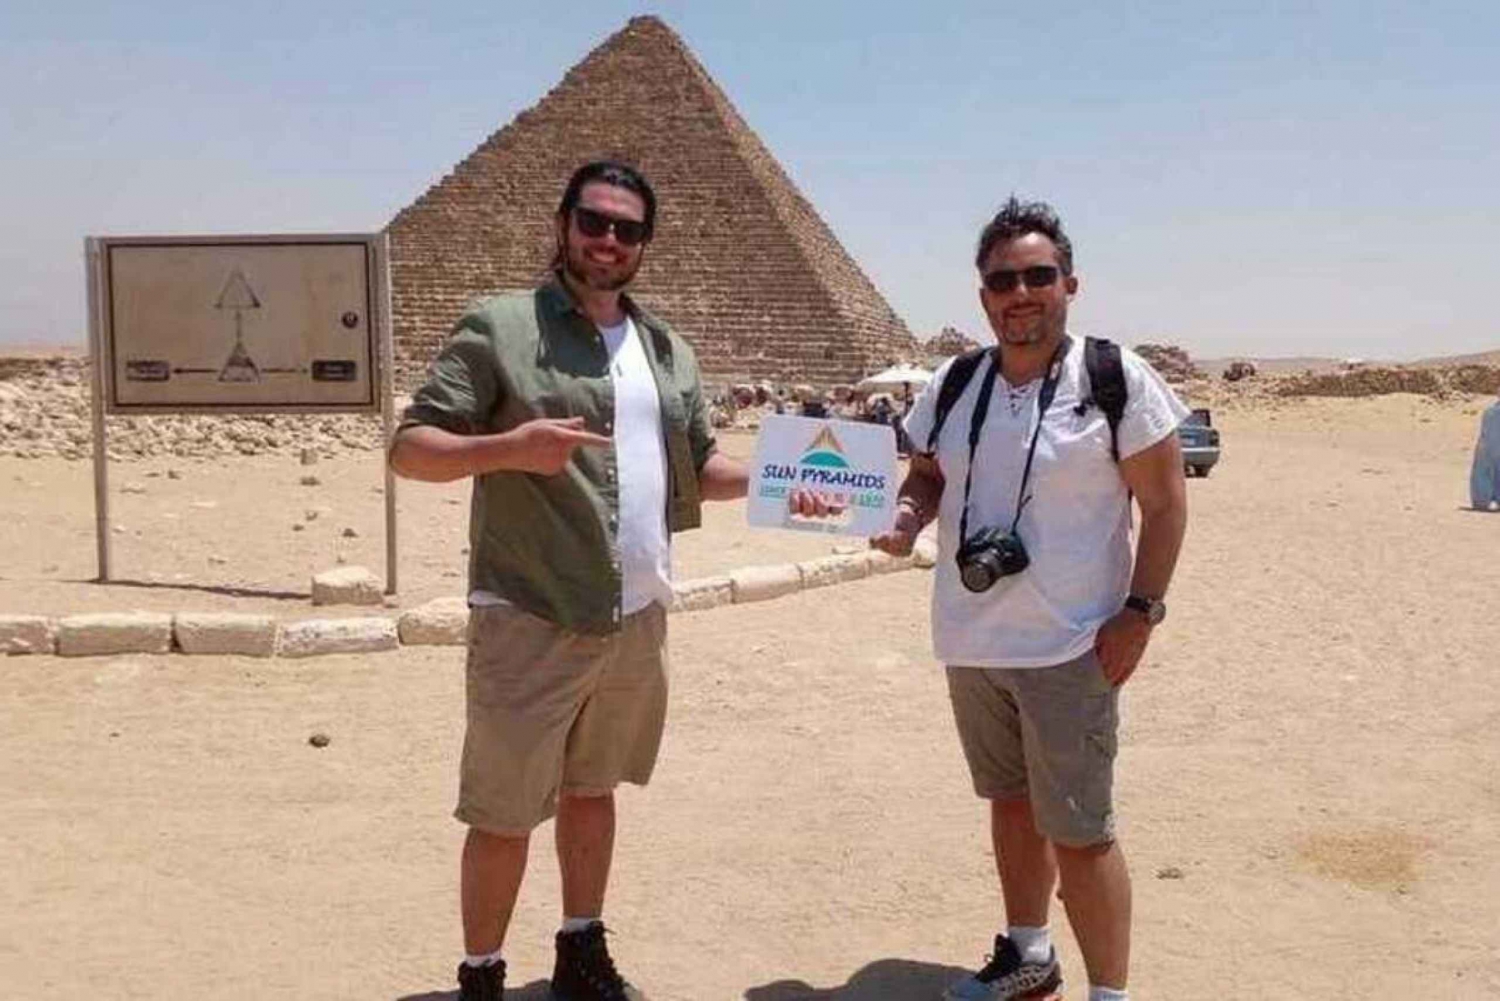 2 Days Tour To Pyramids, Museum and Coptic Cairo